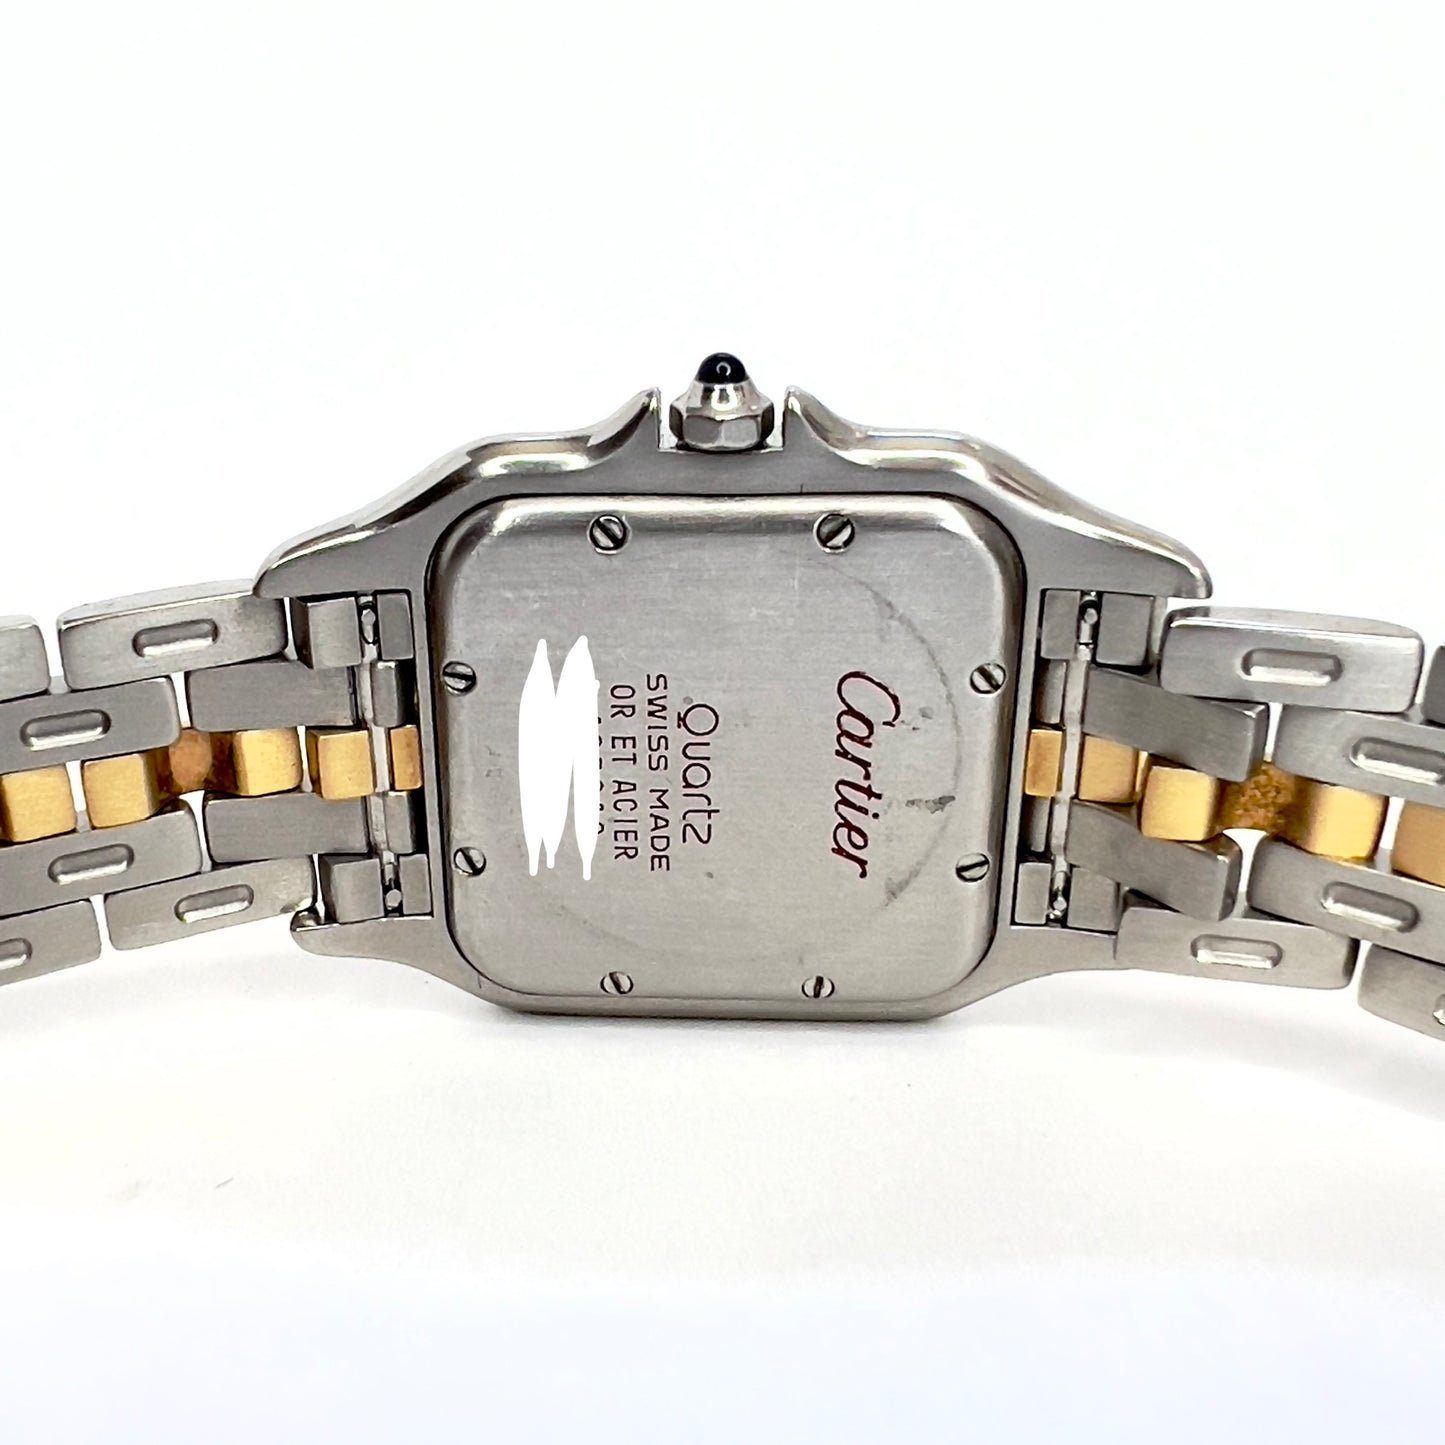 CARTIER PANTHERE Quartz 27mm 1 Row Gold ~1.16TCW DIAMOND Watch